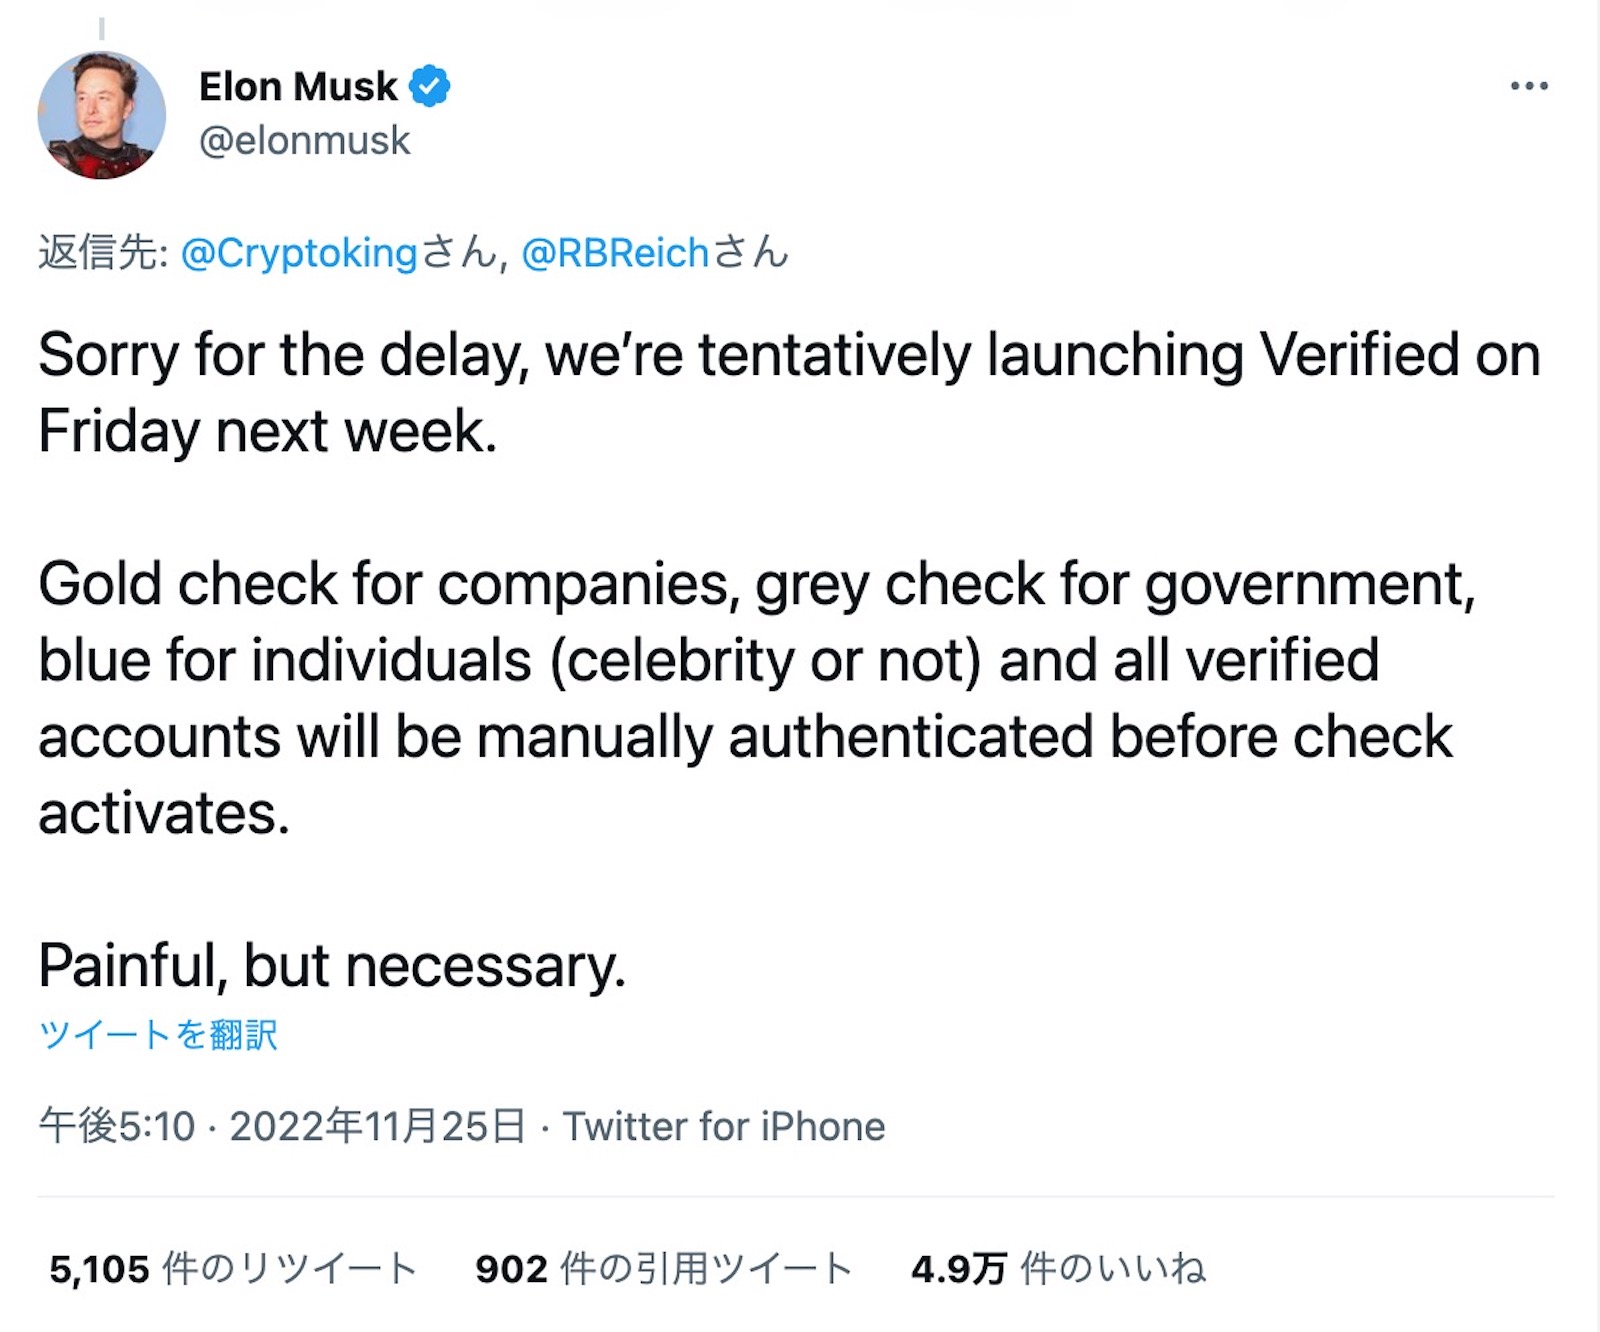 Elon Musk delay on verified